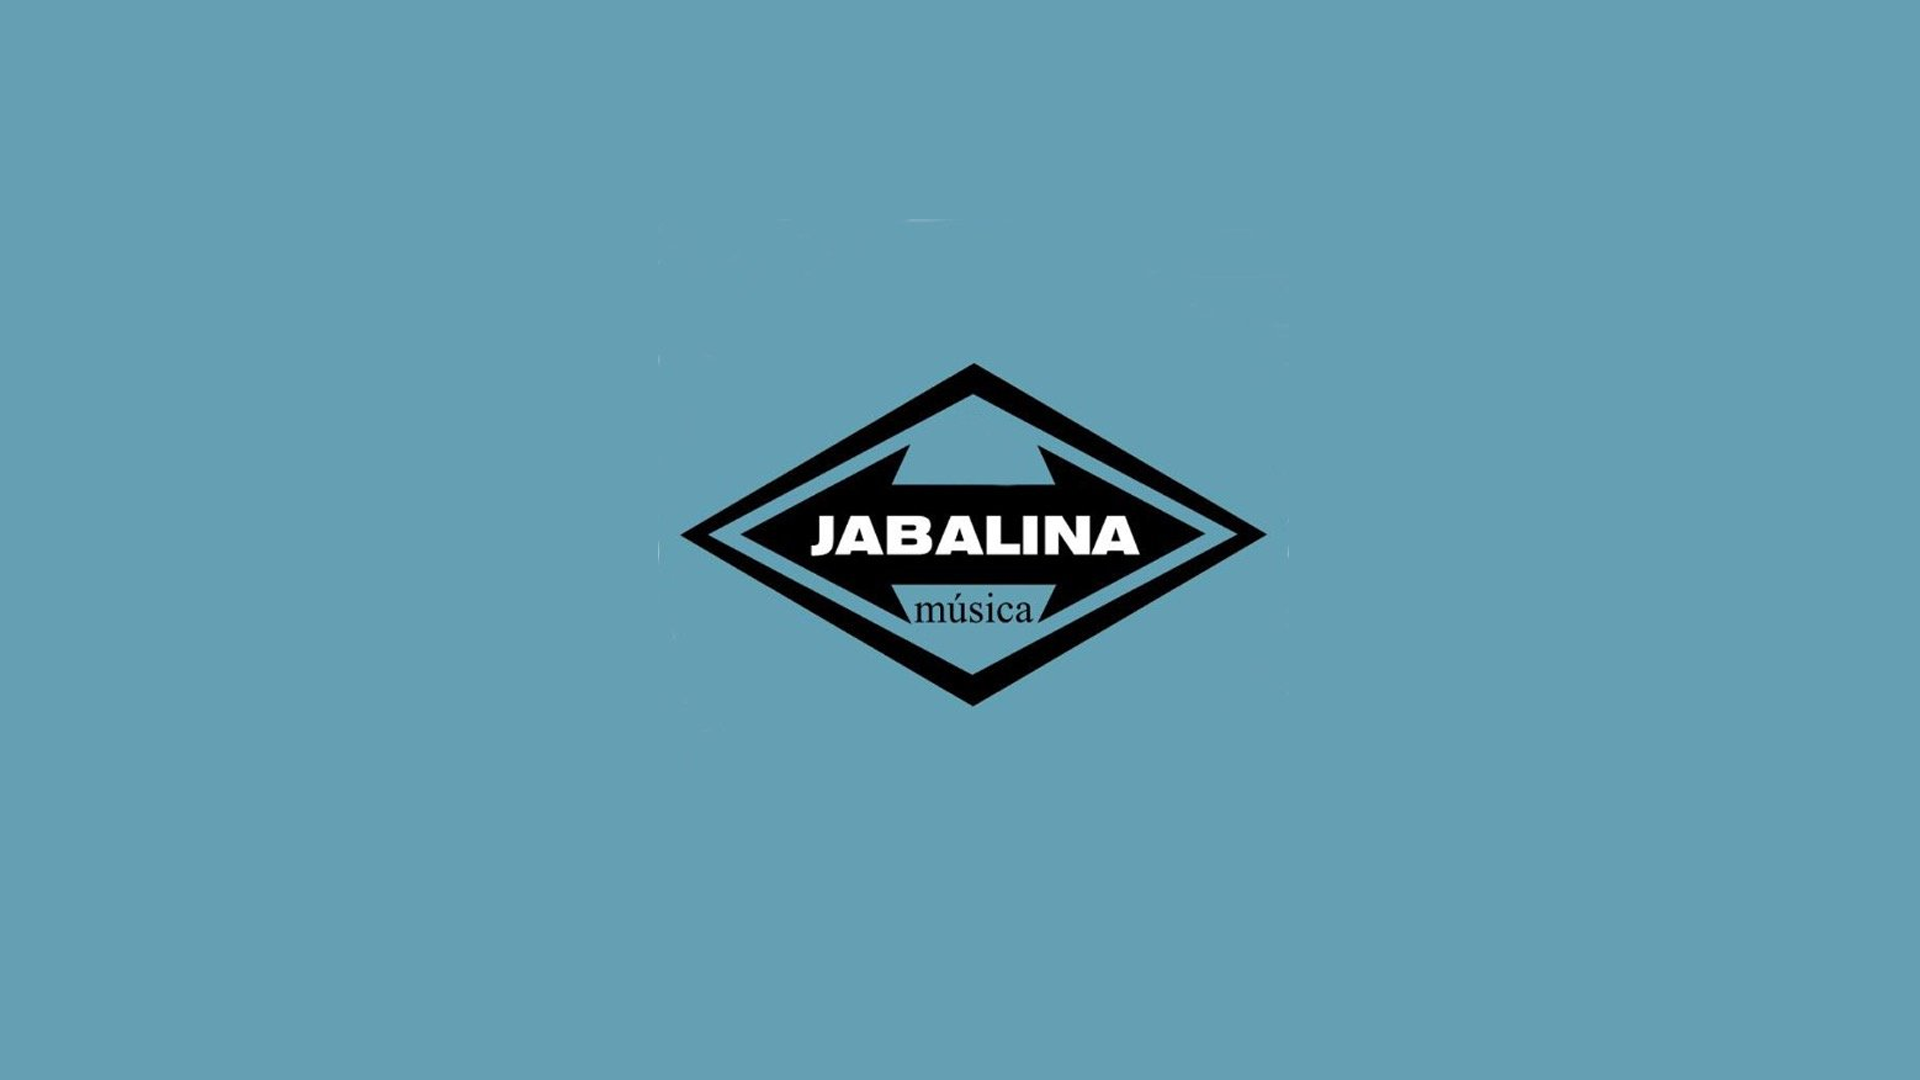 Jabalina Música, web hecha por murciegalo en 2000